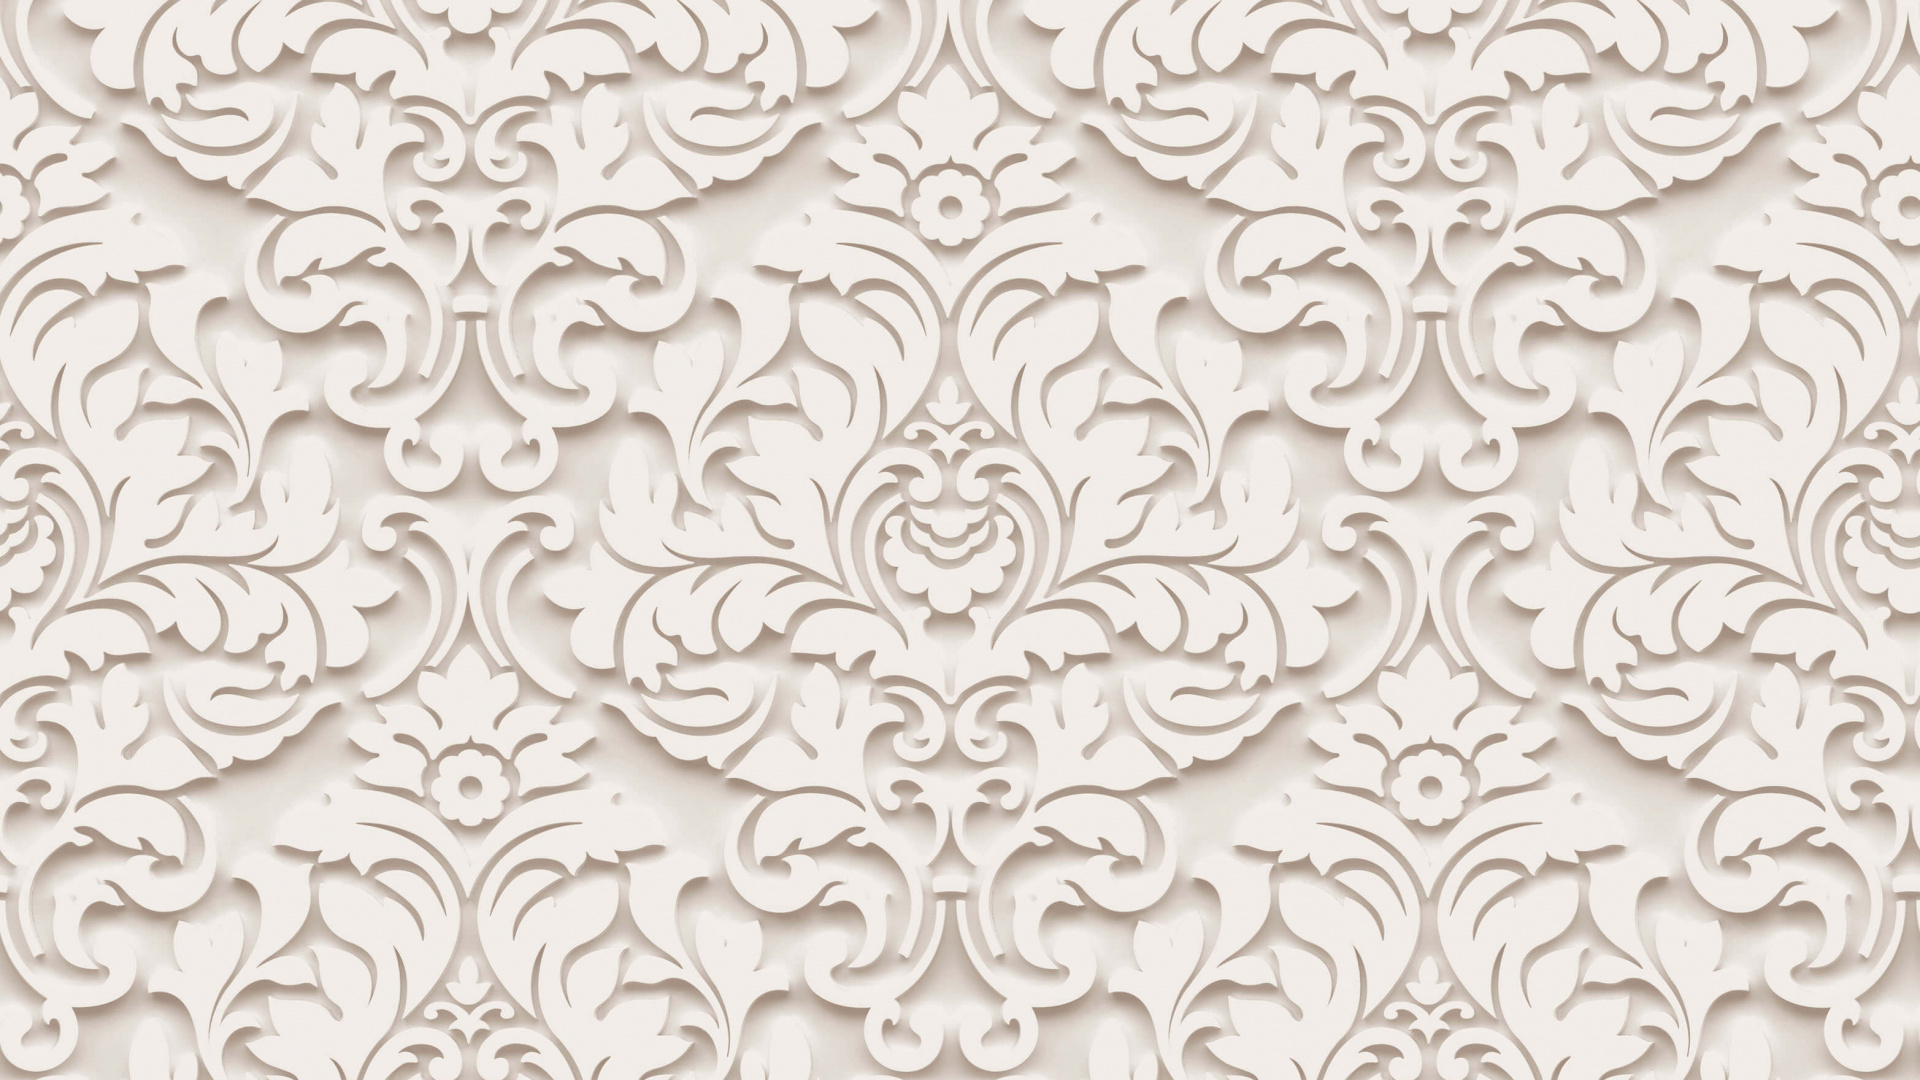 Textil Floral Blanco y Negro. Wallpaper in 1920x1080 Resolution